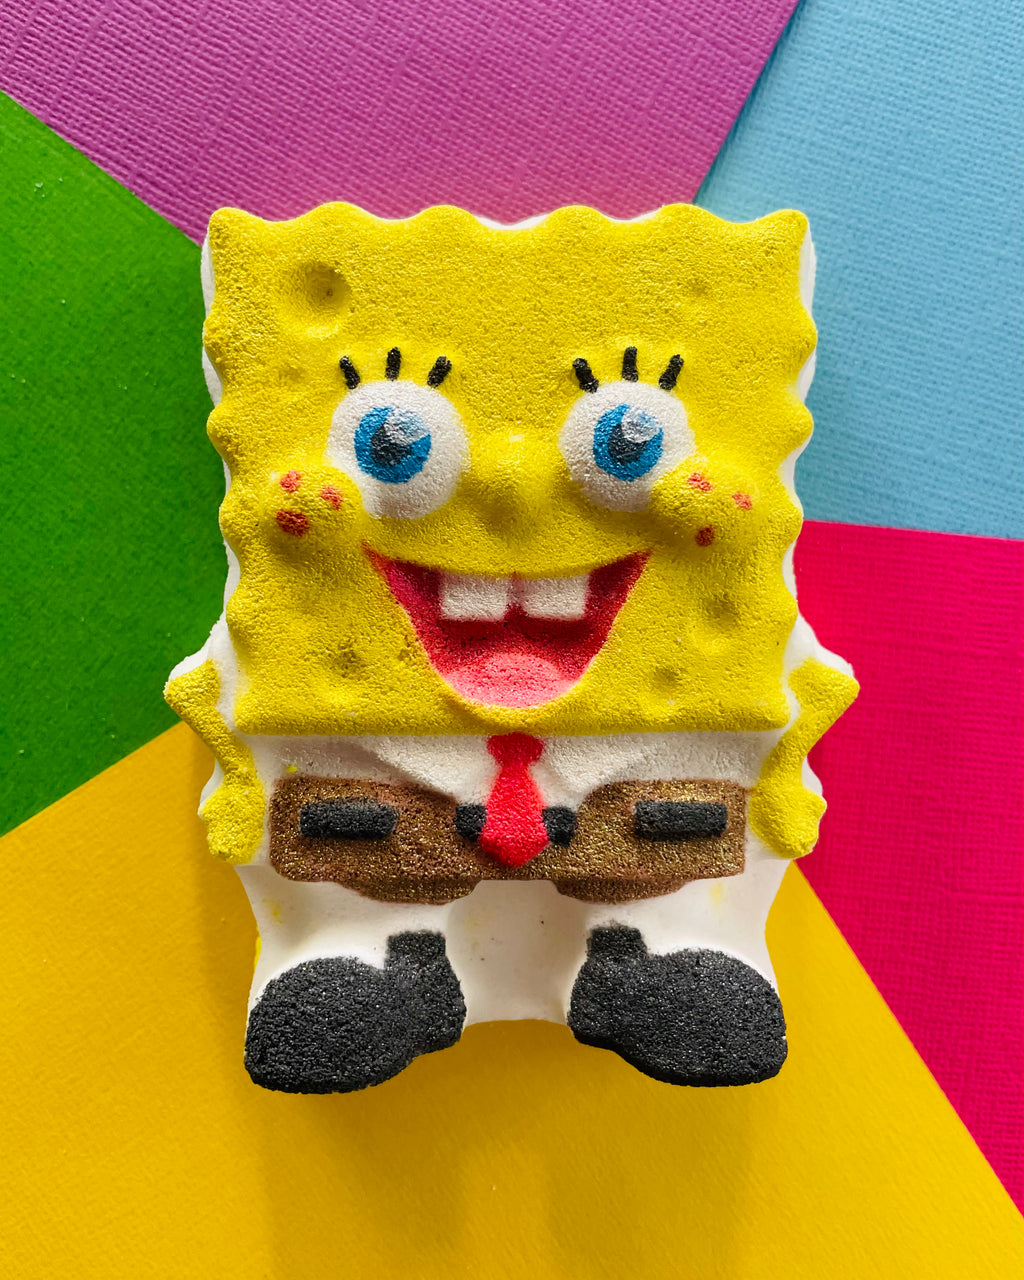 Sponge Boy